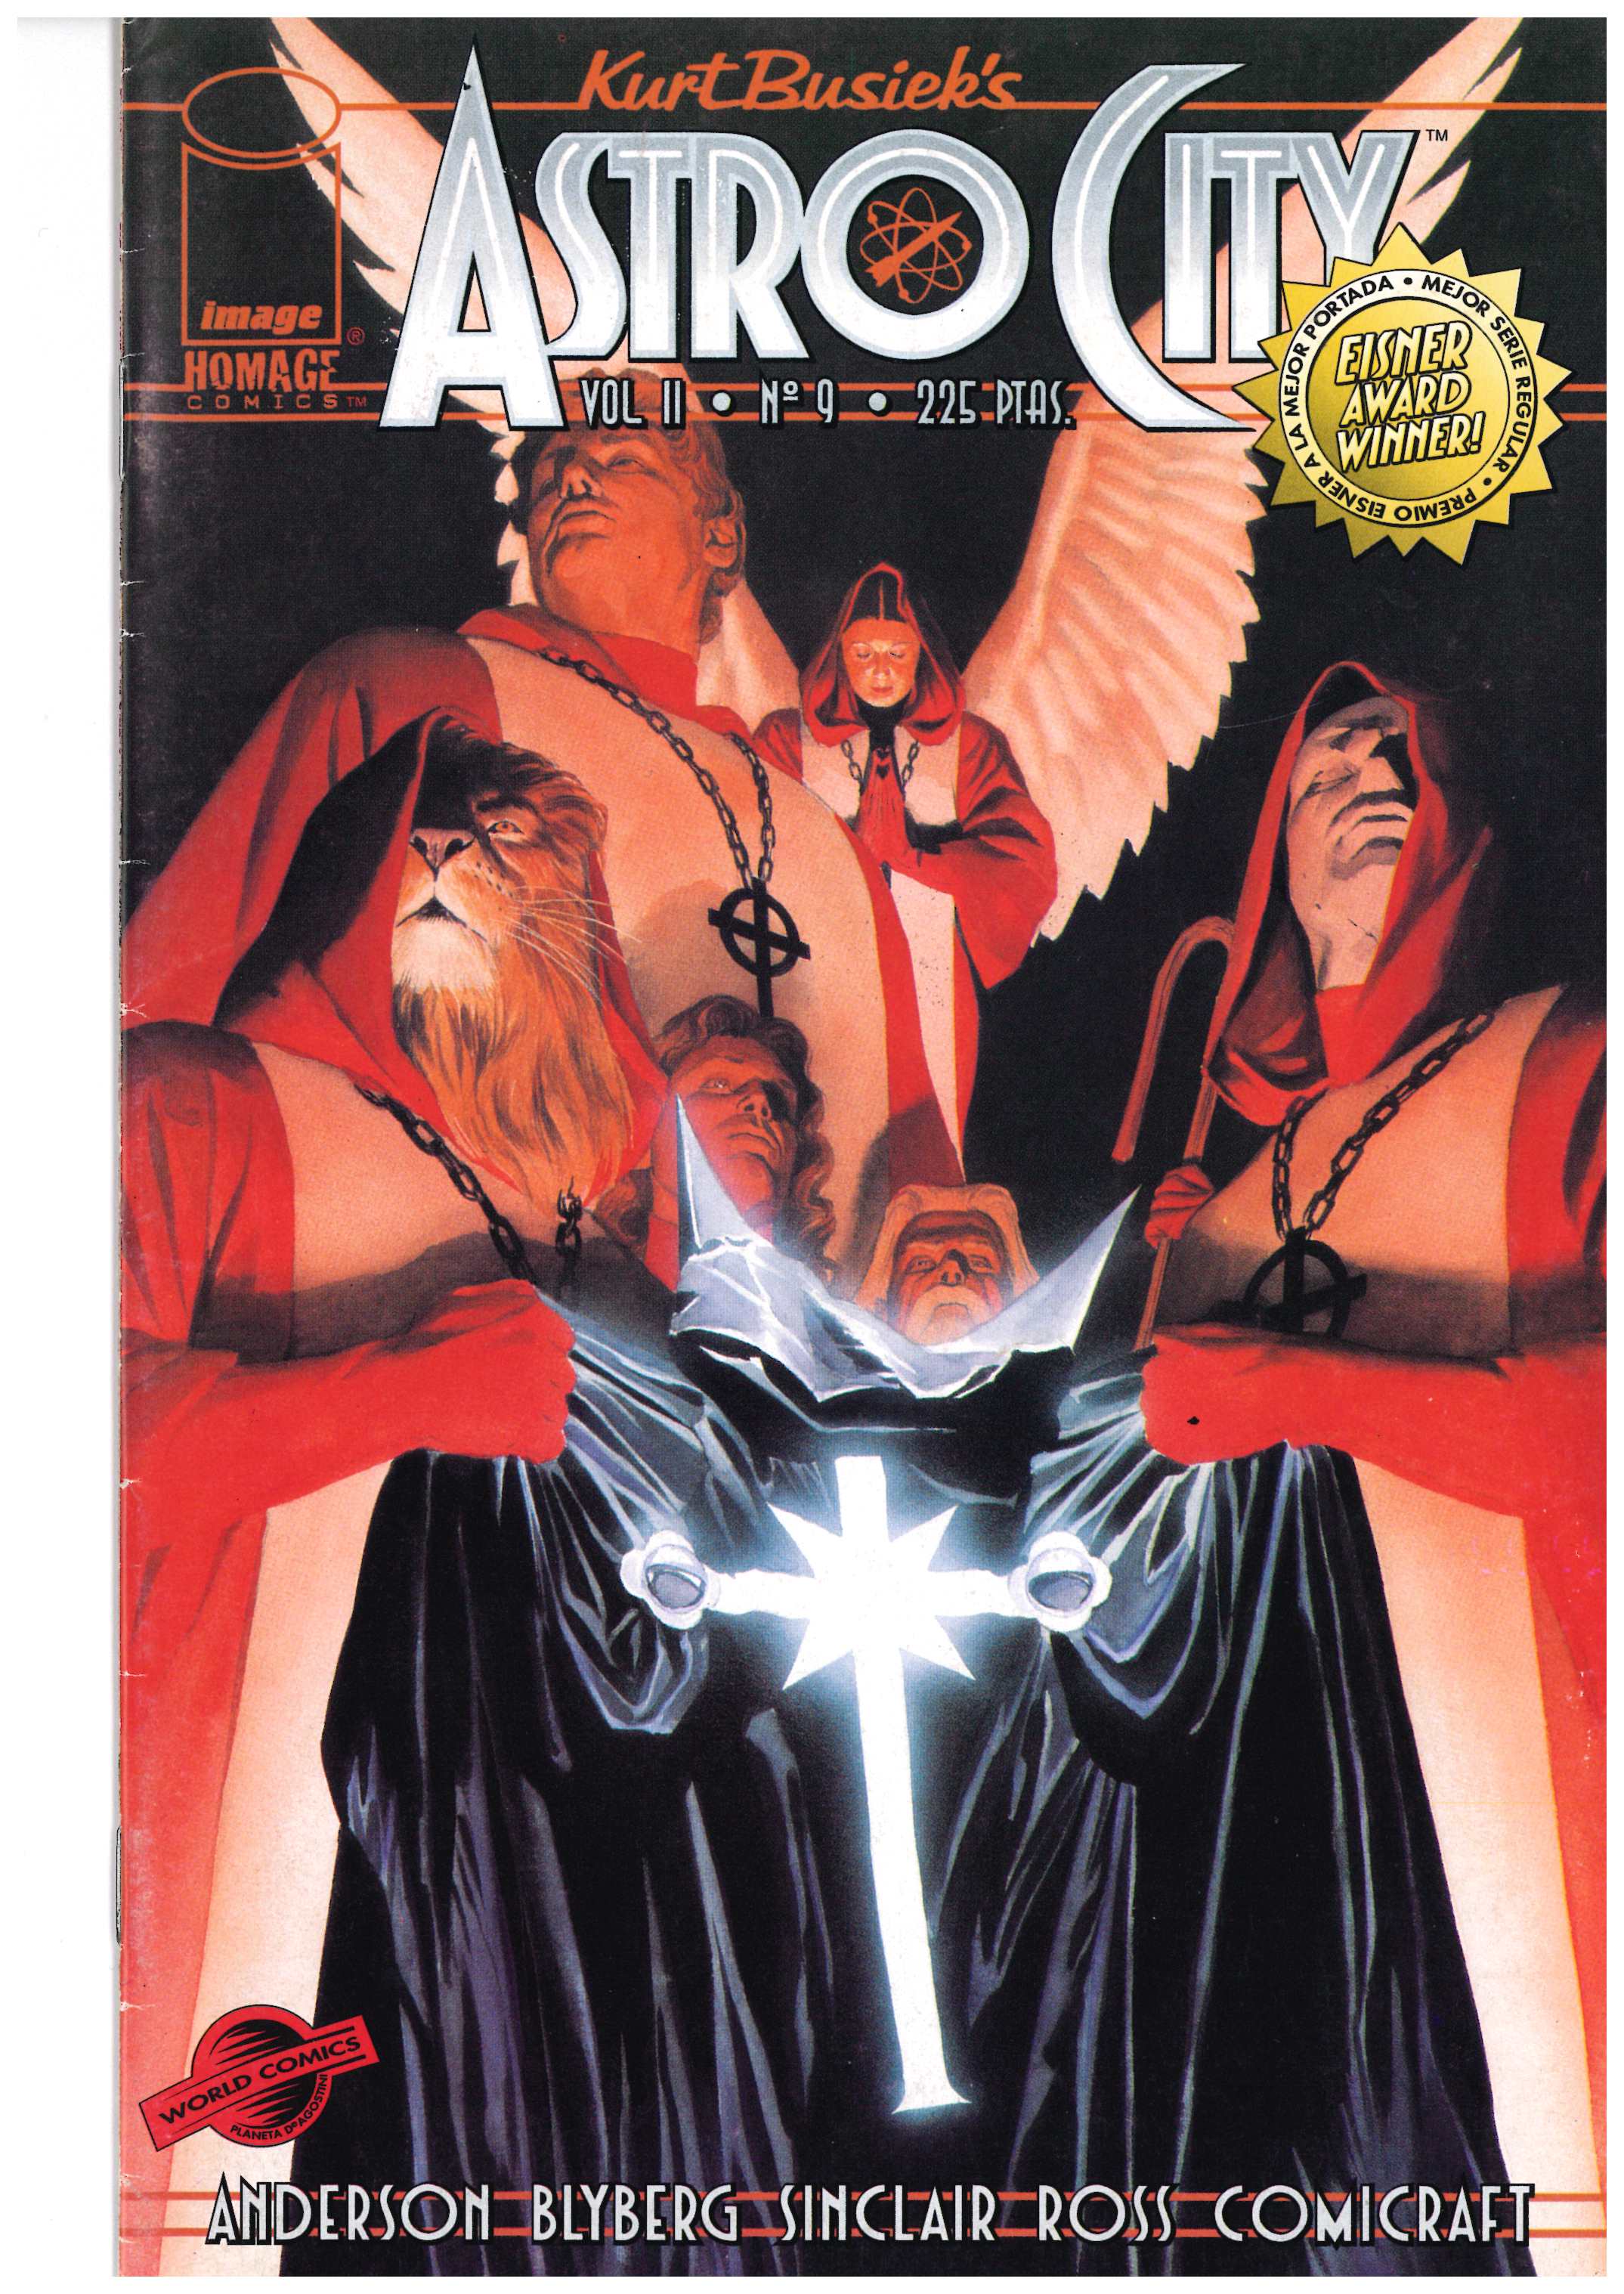 Astro City v2. World Comics 1999. Nº 9